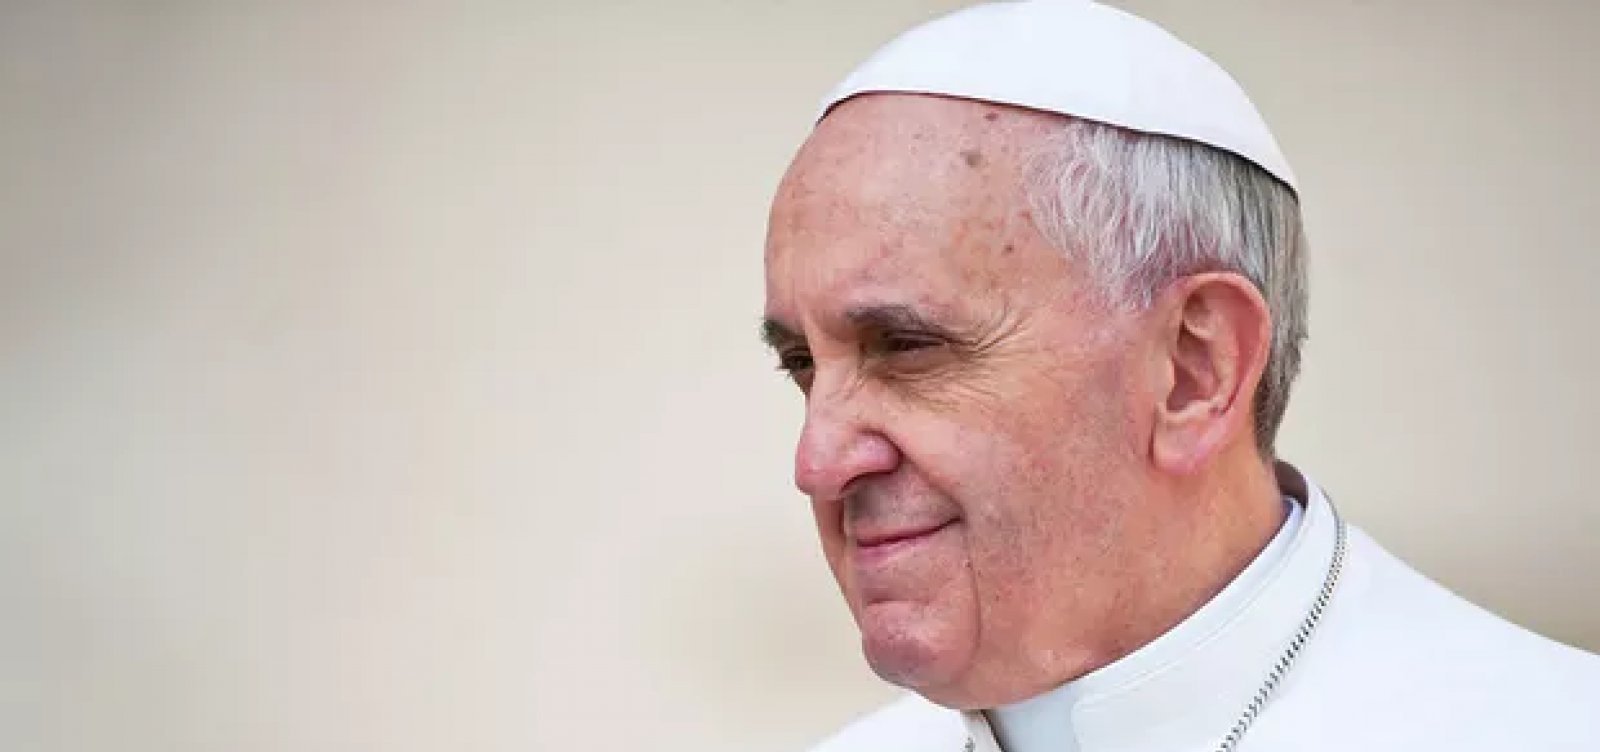 No Domingo de Ramos, Papa reza pelas vítimas de atentado na Rússia: “Ato desumano que ofende a Deus”